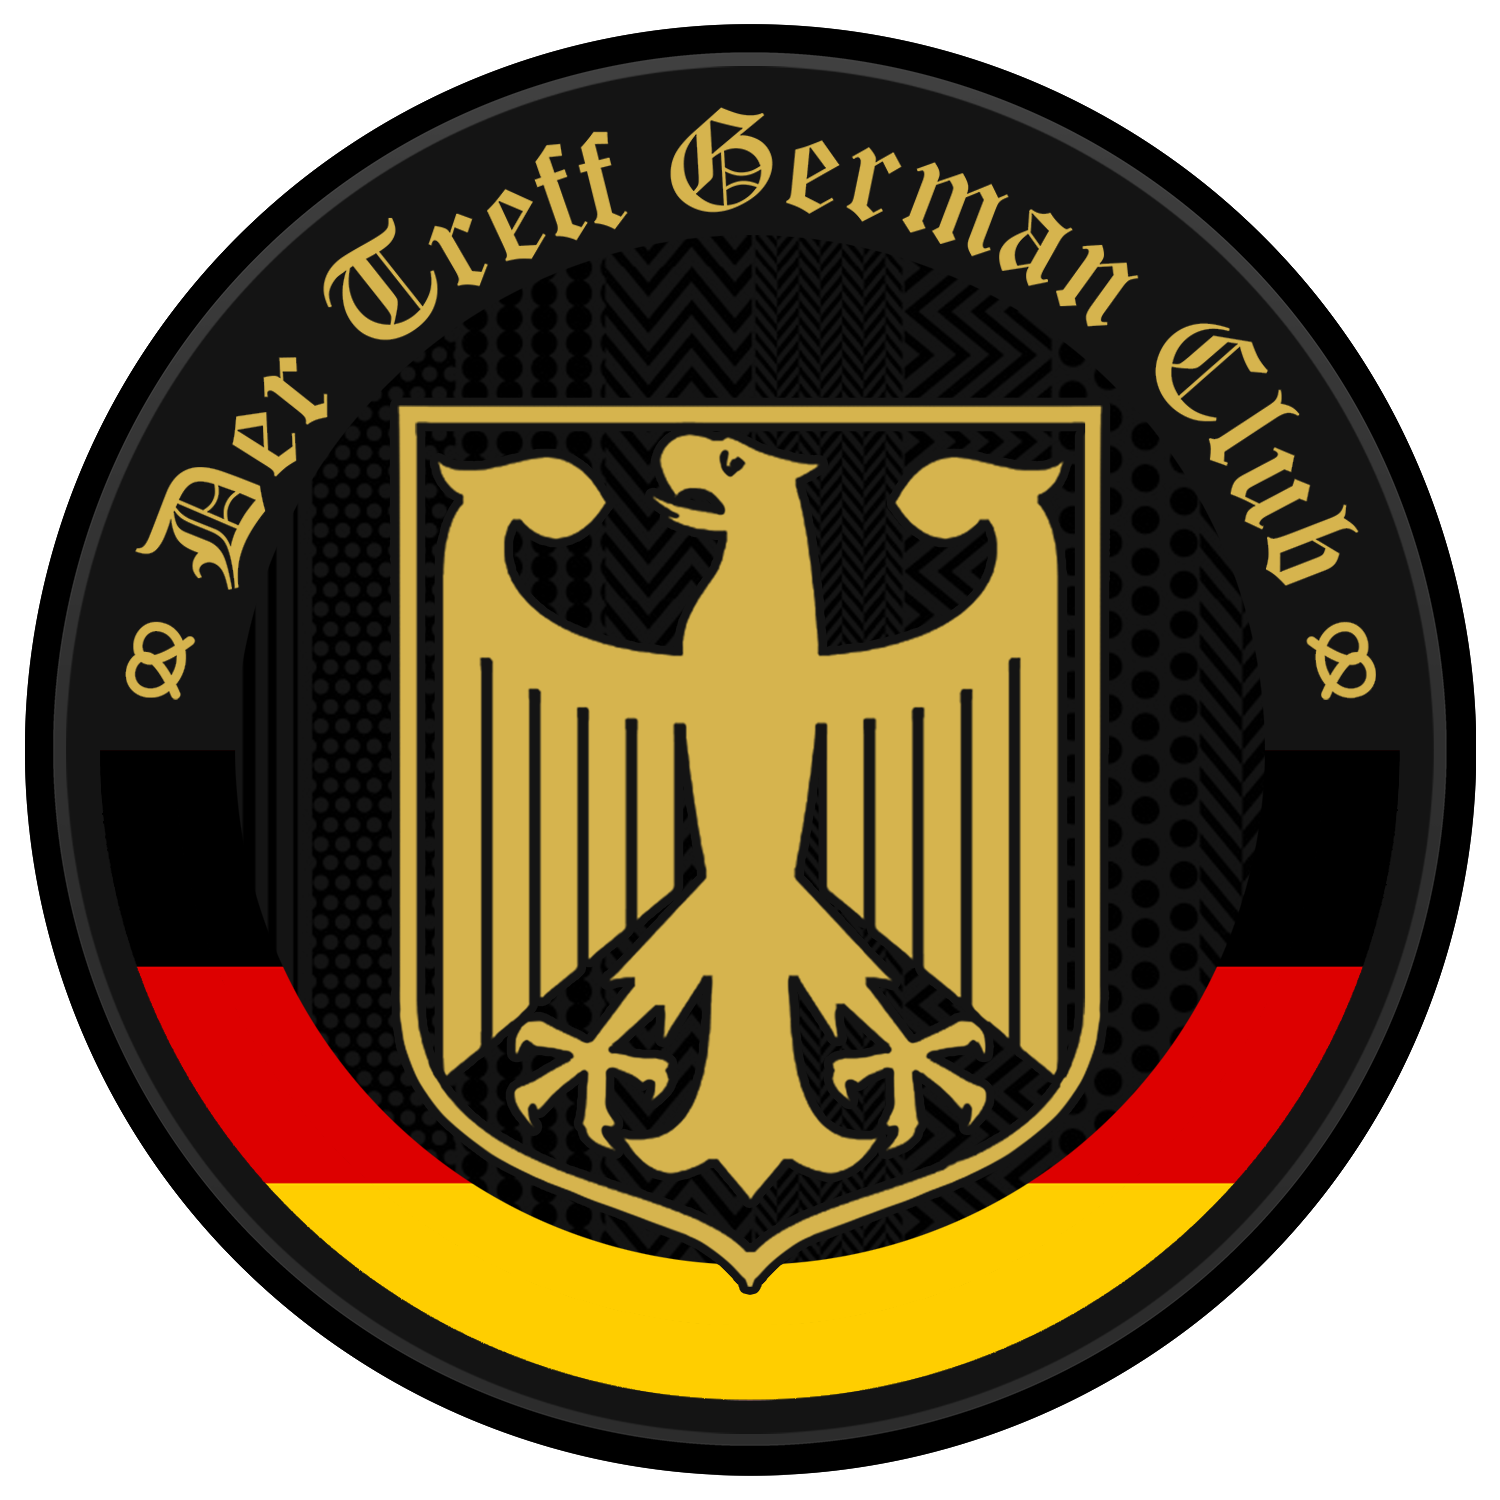 Der Treff German Club